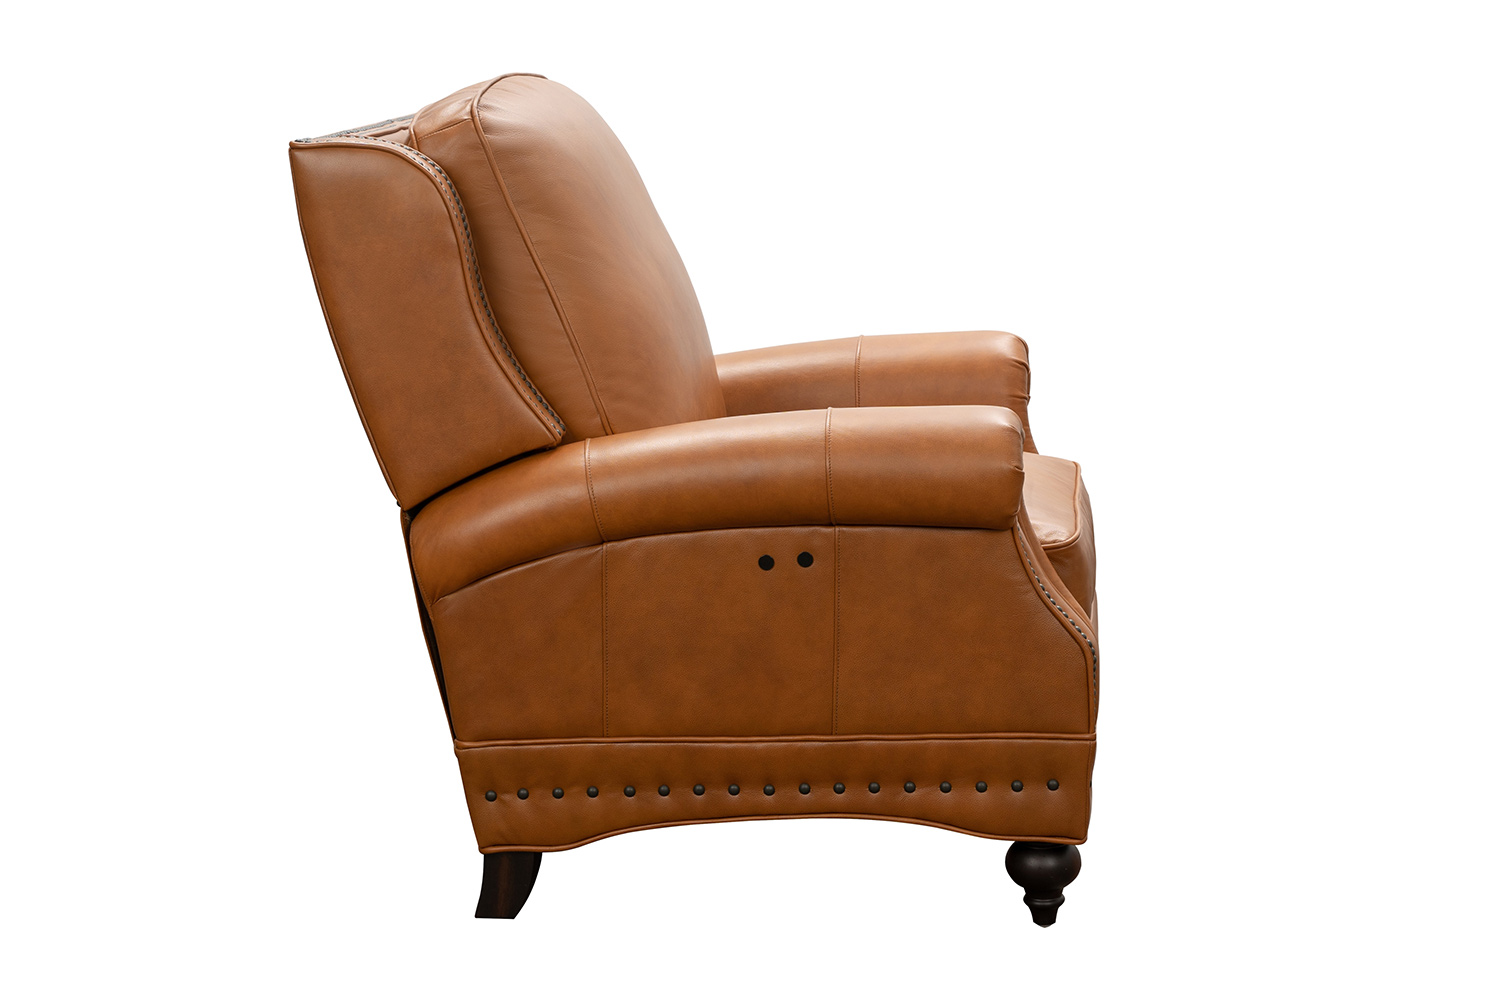 Barcalounger Marysville Power Recliner Chair - Ashford Cognac/All Leather